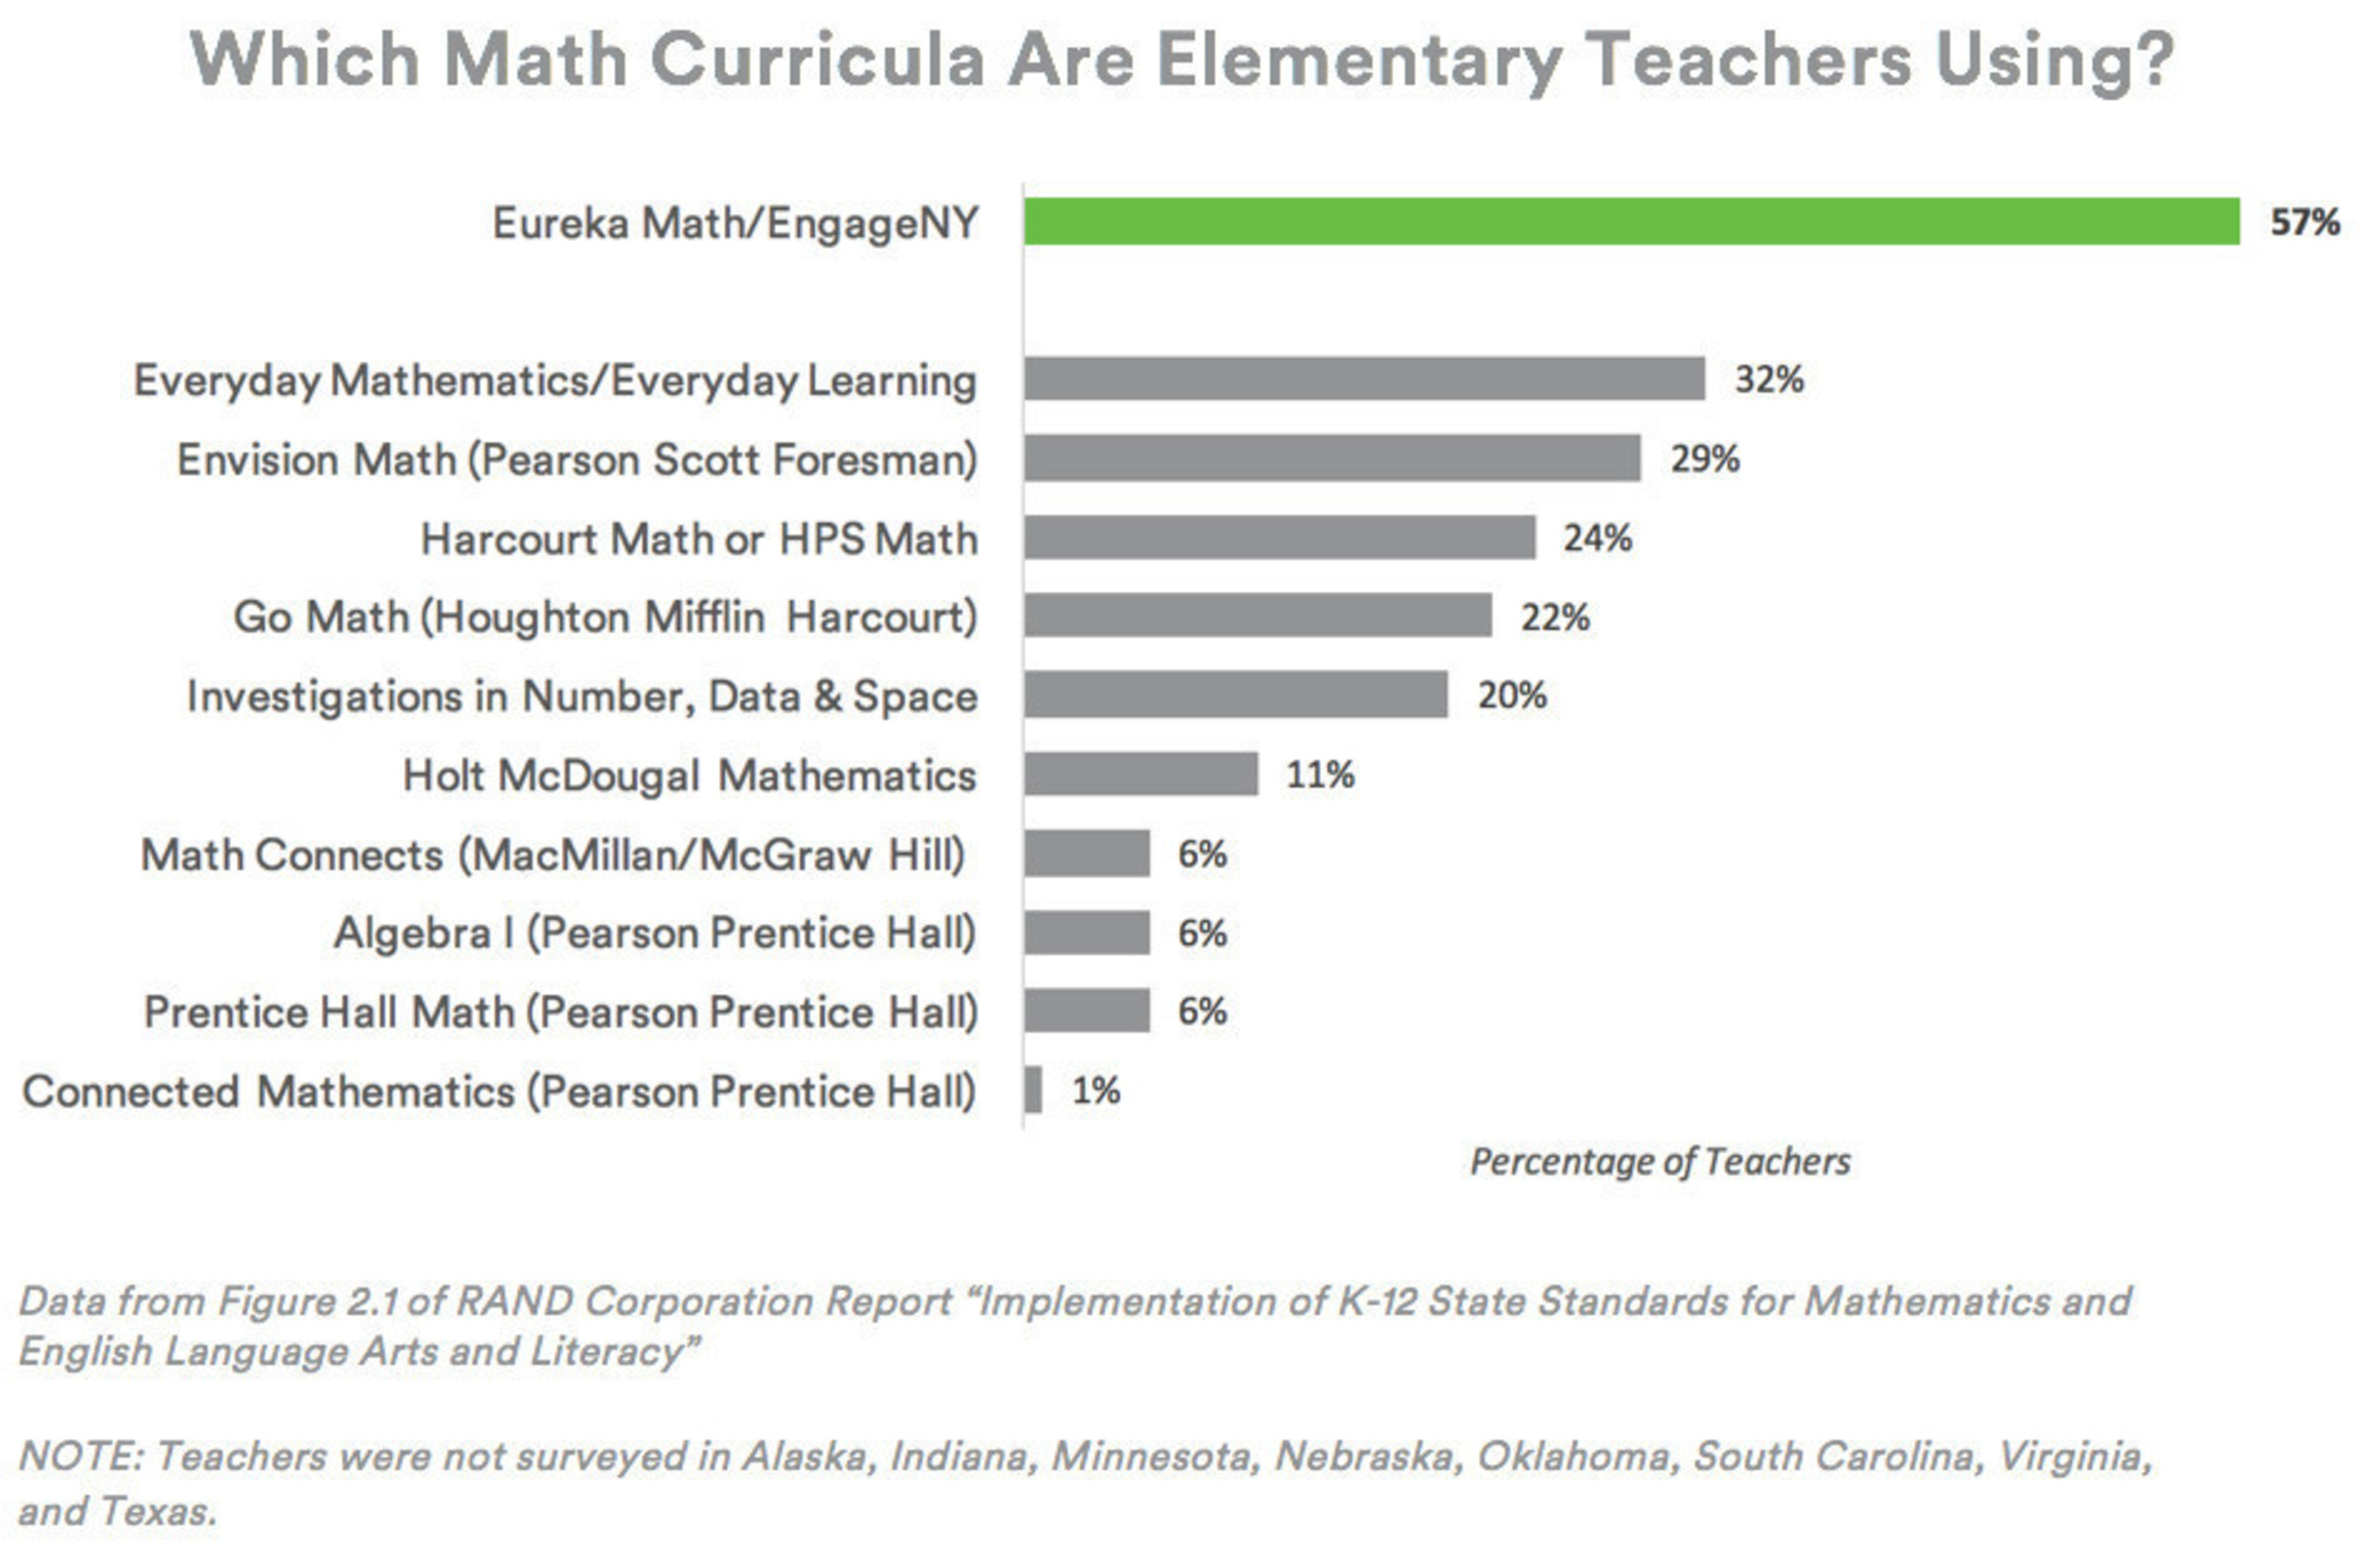 What Math Curricula Are Elementary Teachers Using?